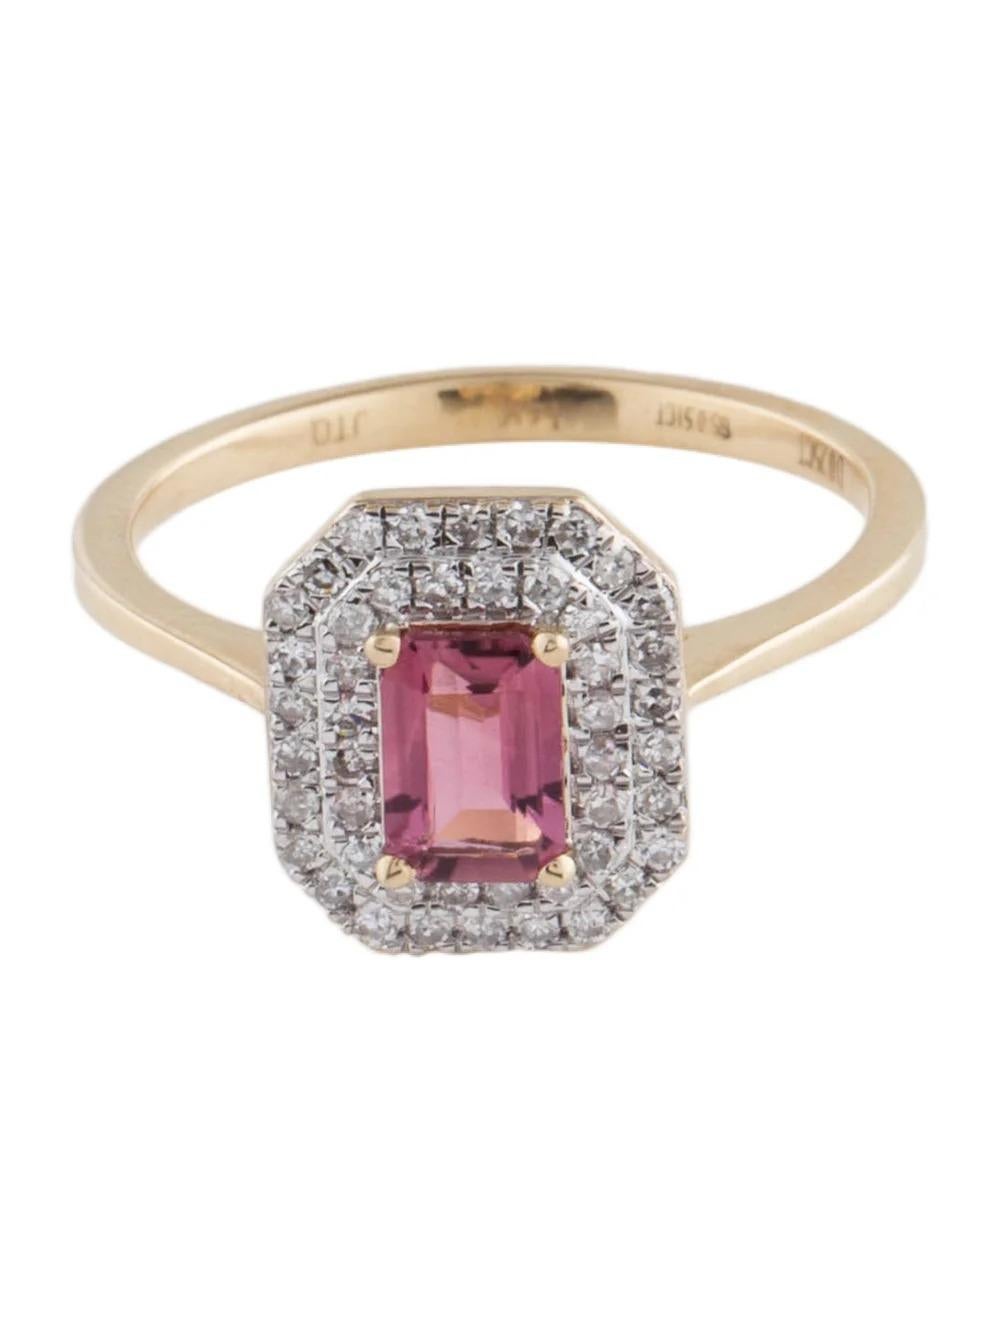 Emerald Cut 14K Tourmaline & Diamond Cocktail Ring, Size 6.5 - Stunning Gemstones Jewelry For Sale